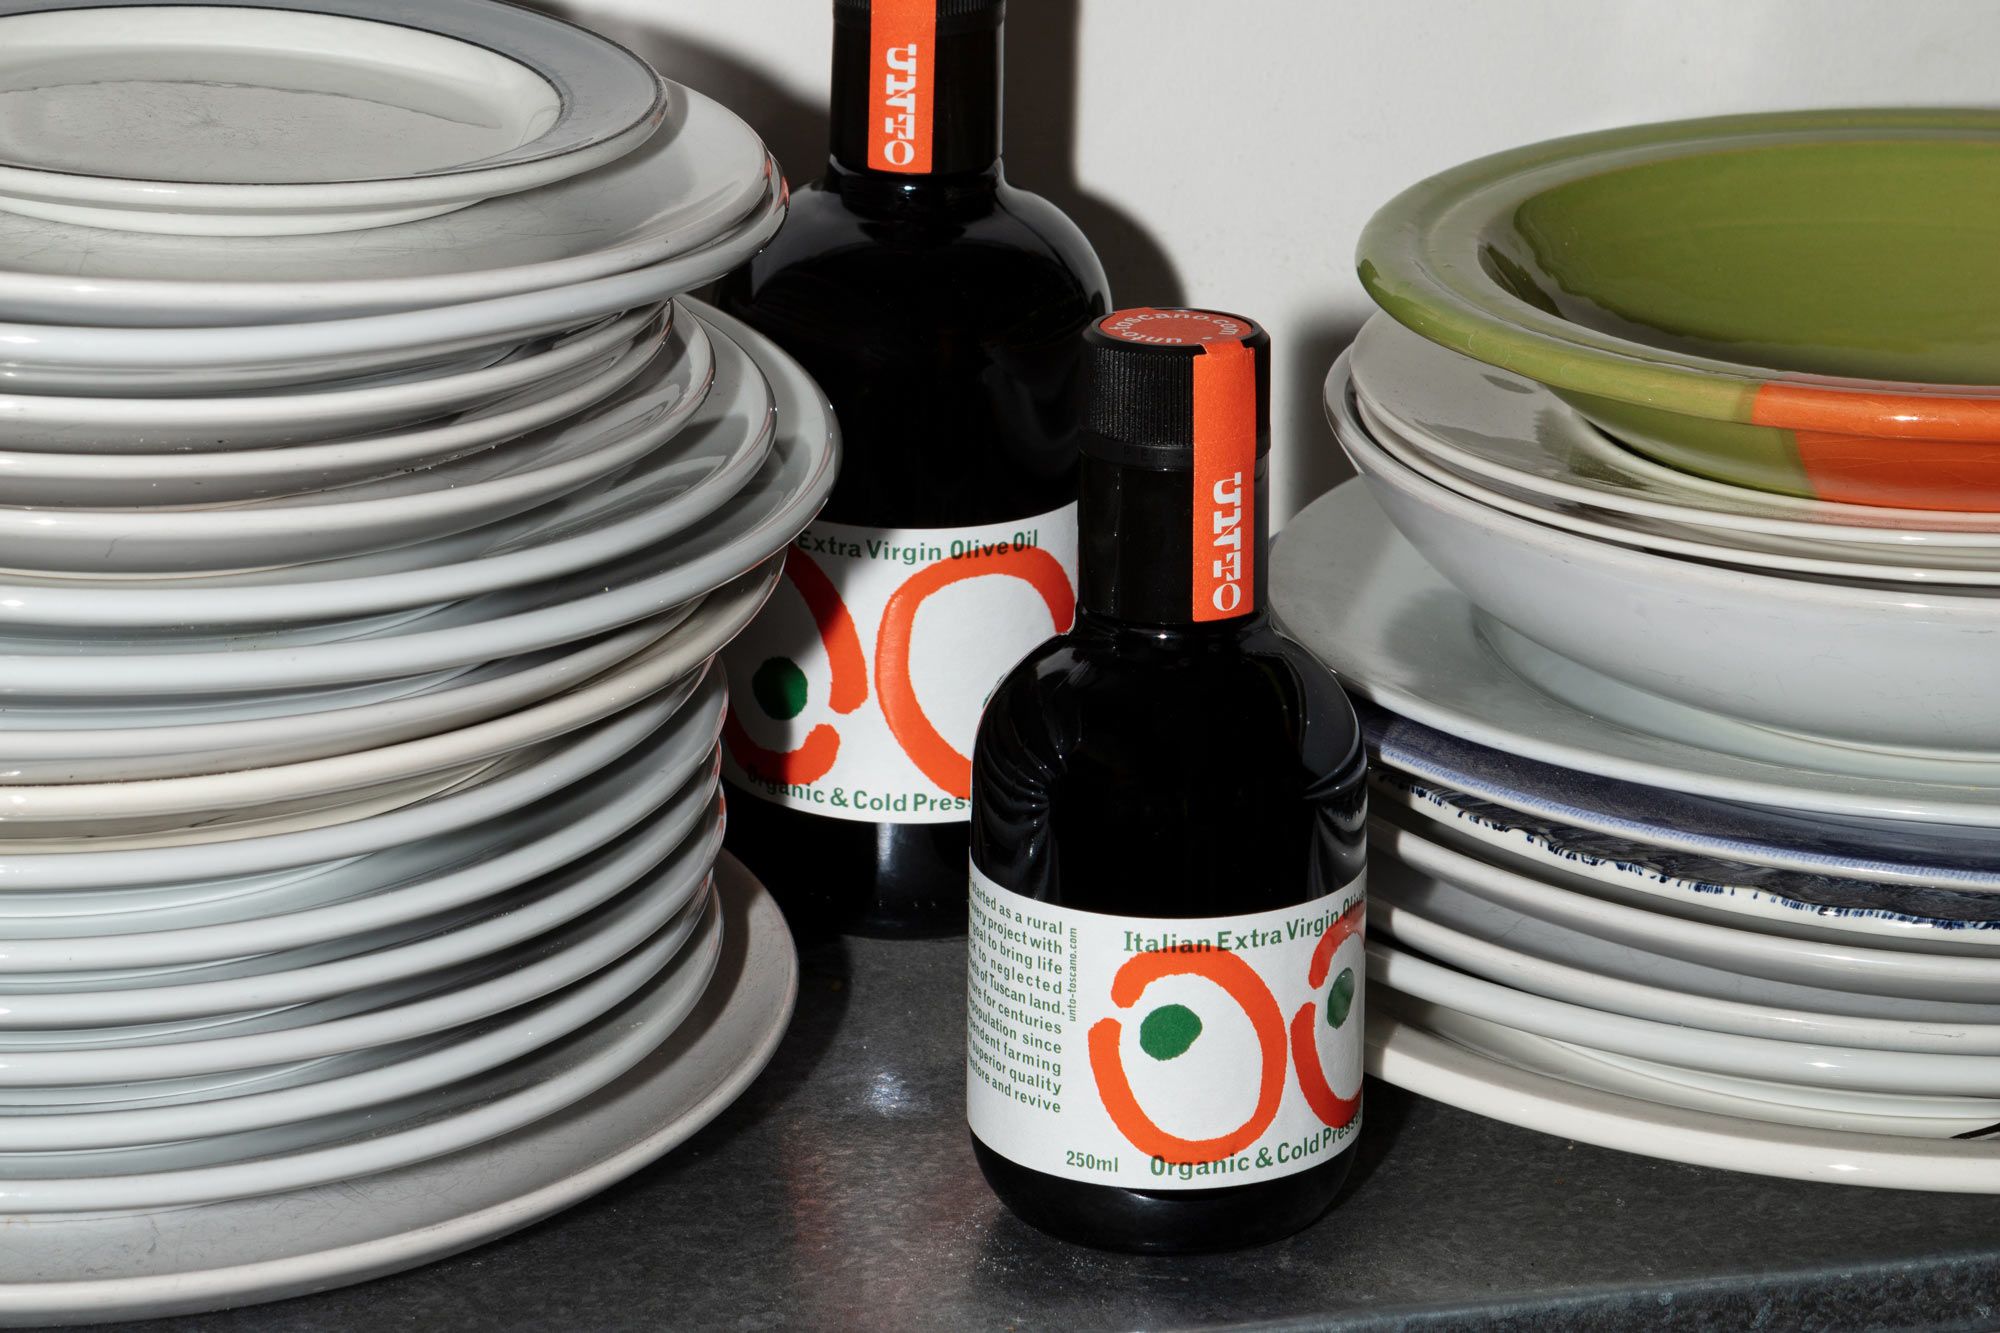 Logo, brand identity and packaging design for Italian Extra Virgin Olive Oil brand Unto designed by Studio Bergini.